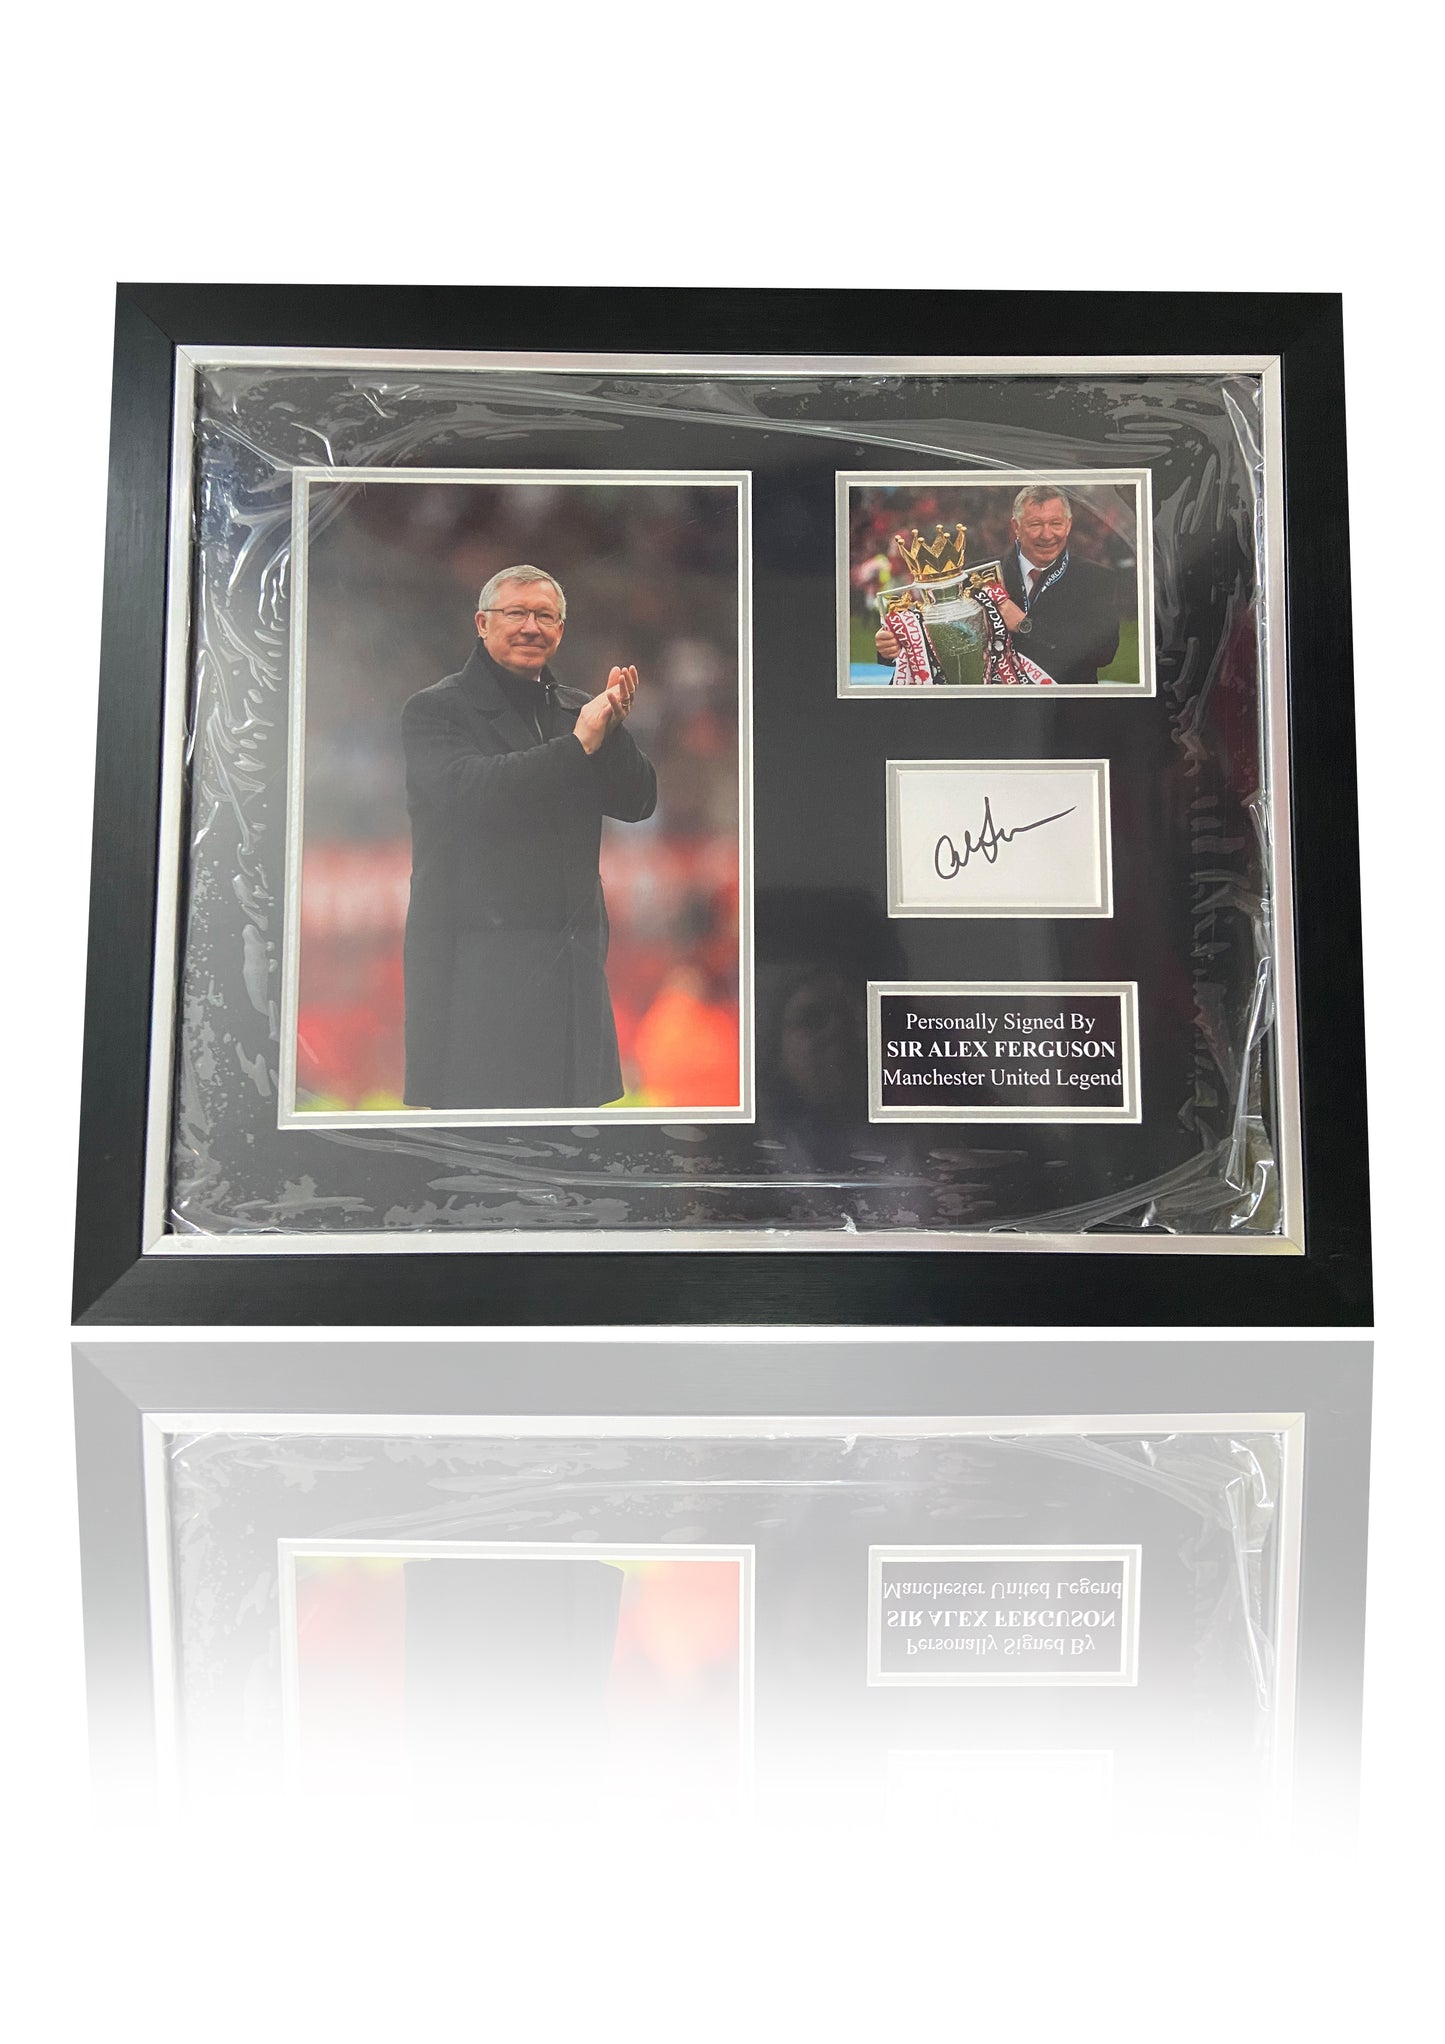 Sir Alex Ferguson Manchester United framed signed photo card montage